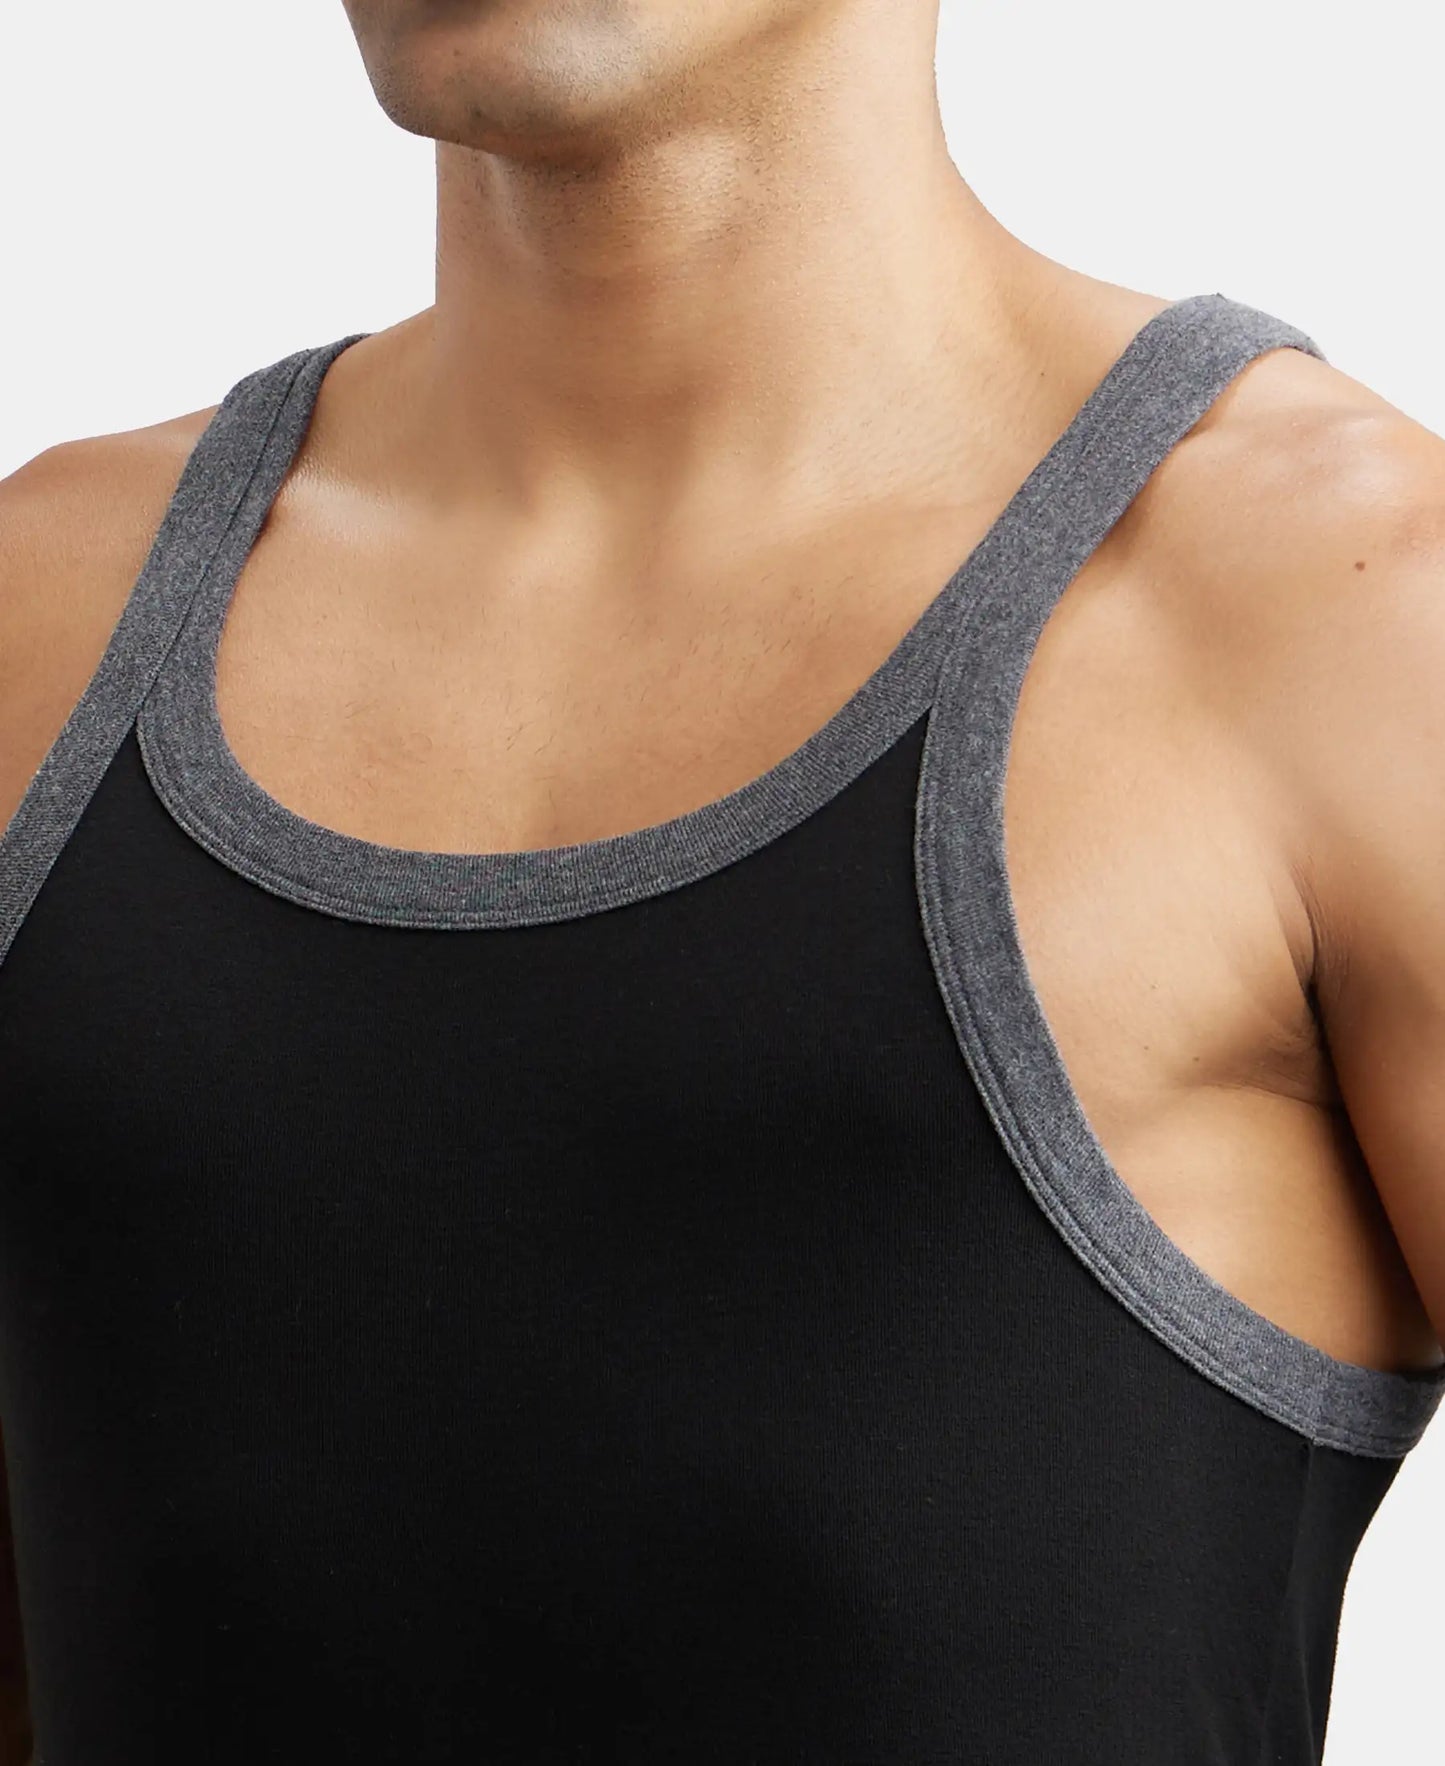 Super Combed Cotton Rib Square Neck Gym Vest - Black & Charcoal Melange-6